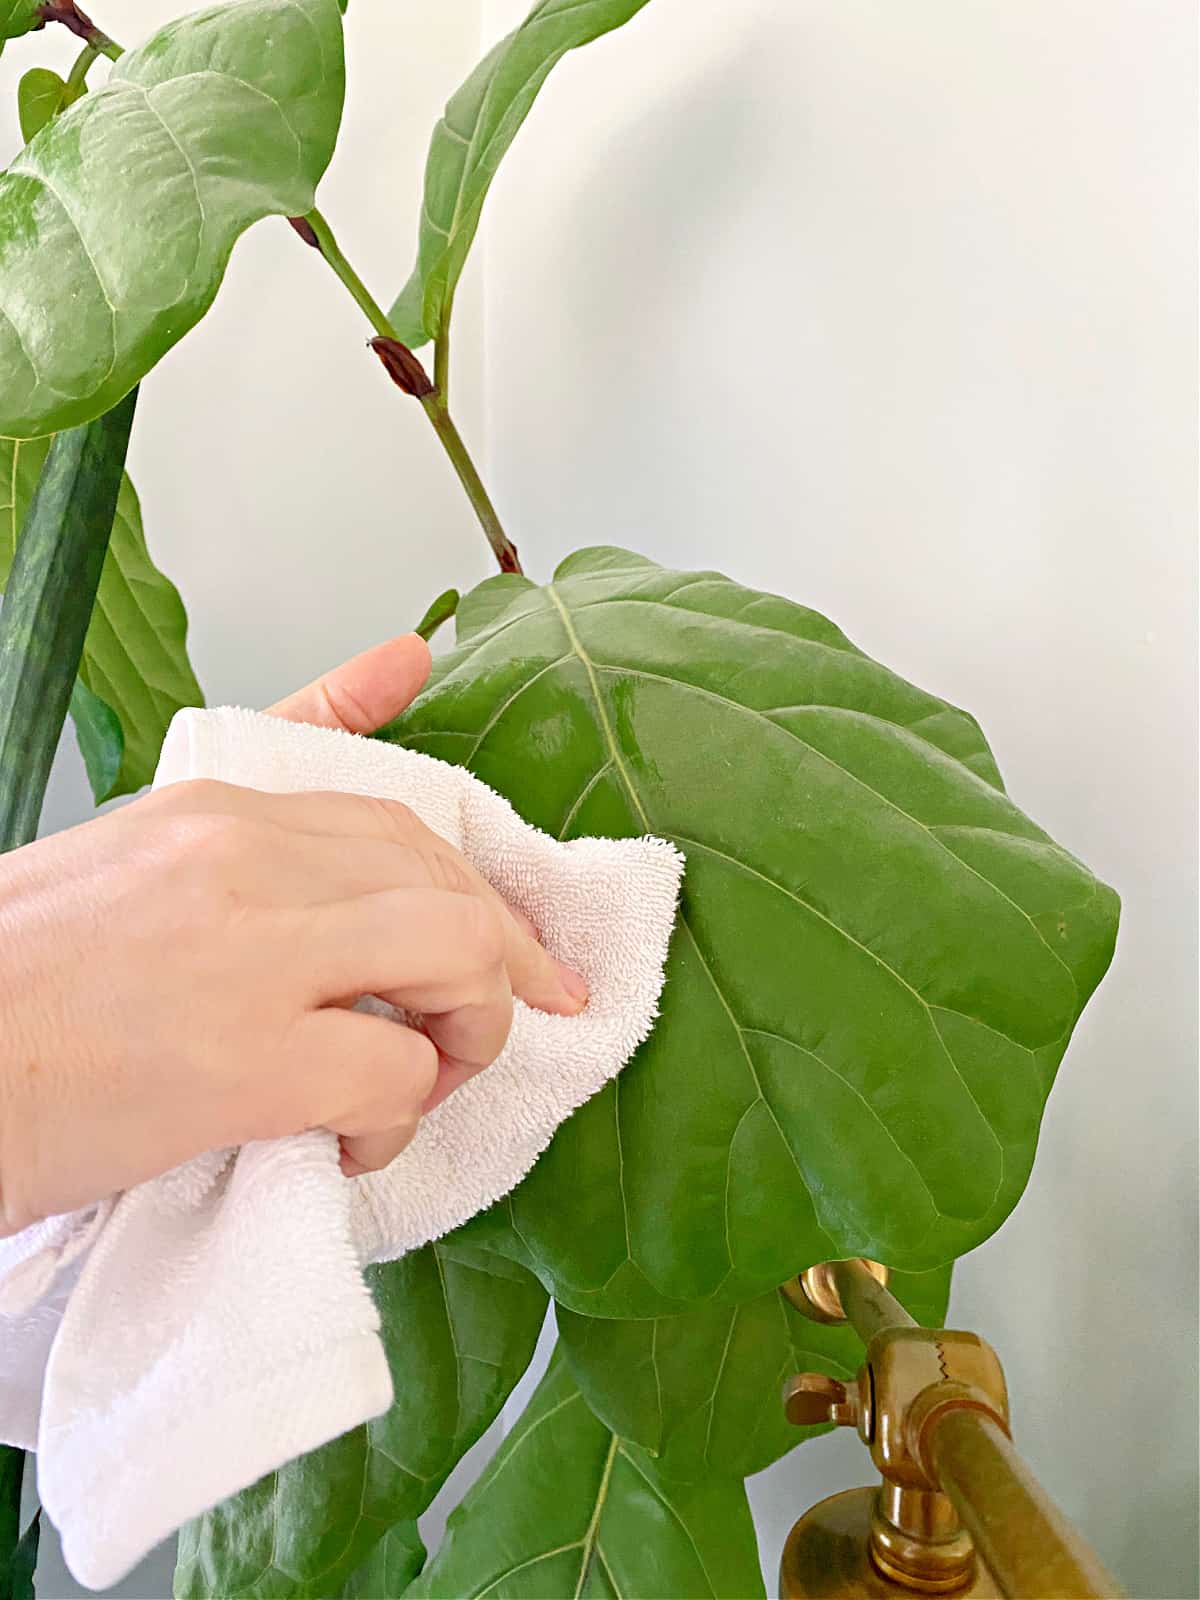 using a soft towel to clean off a fiddle leaf fig leaf